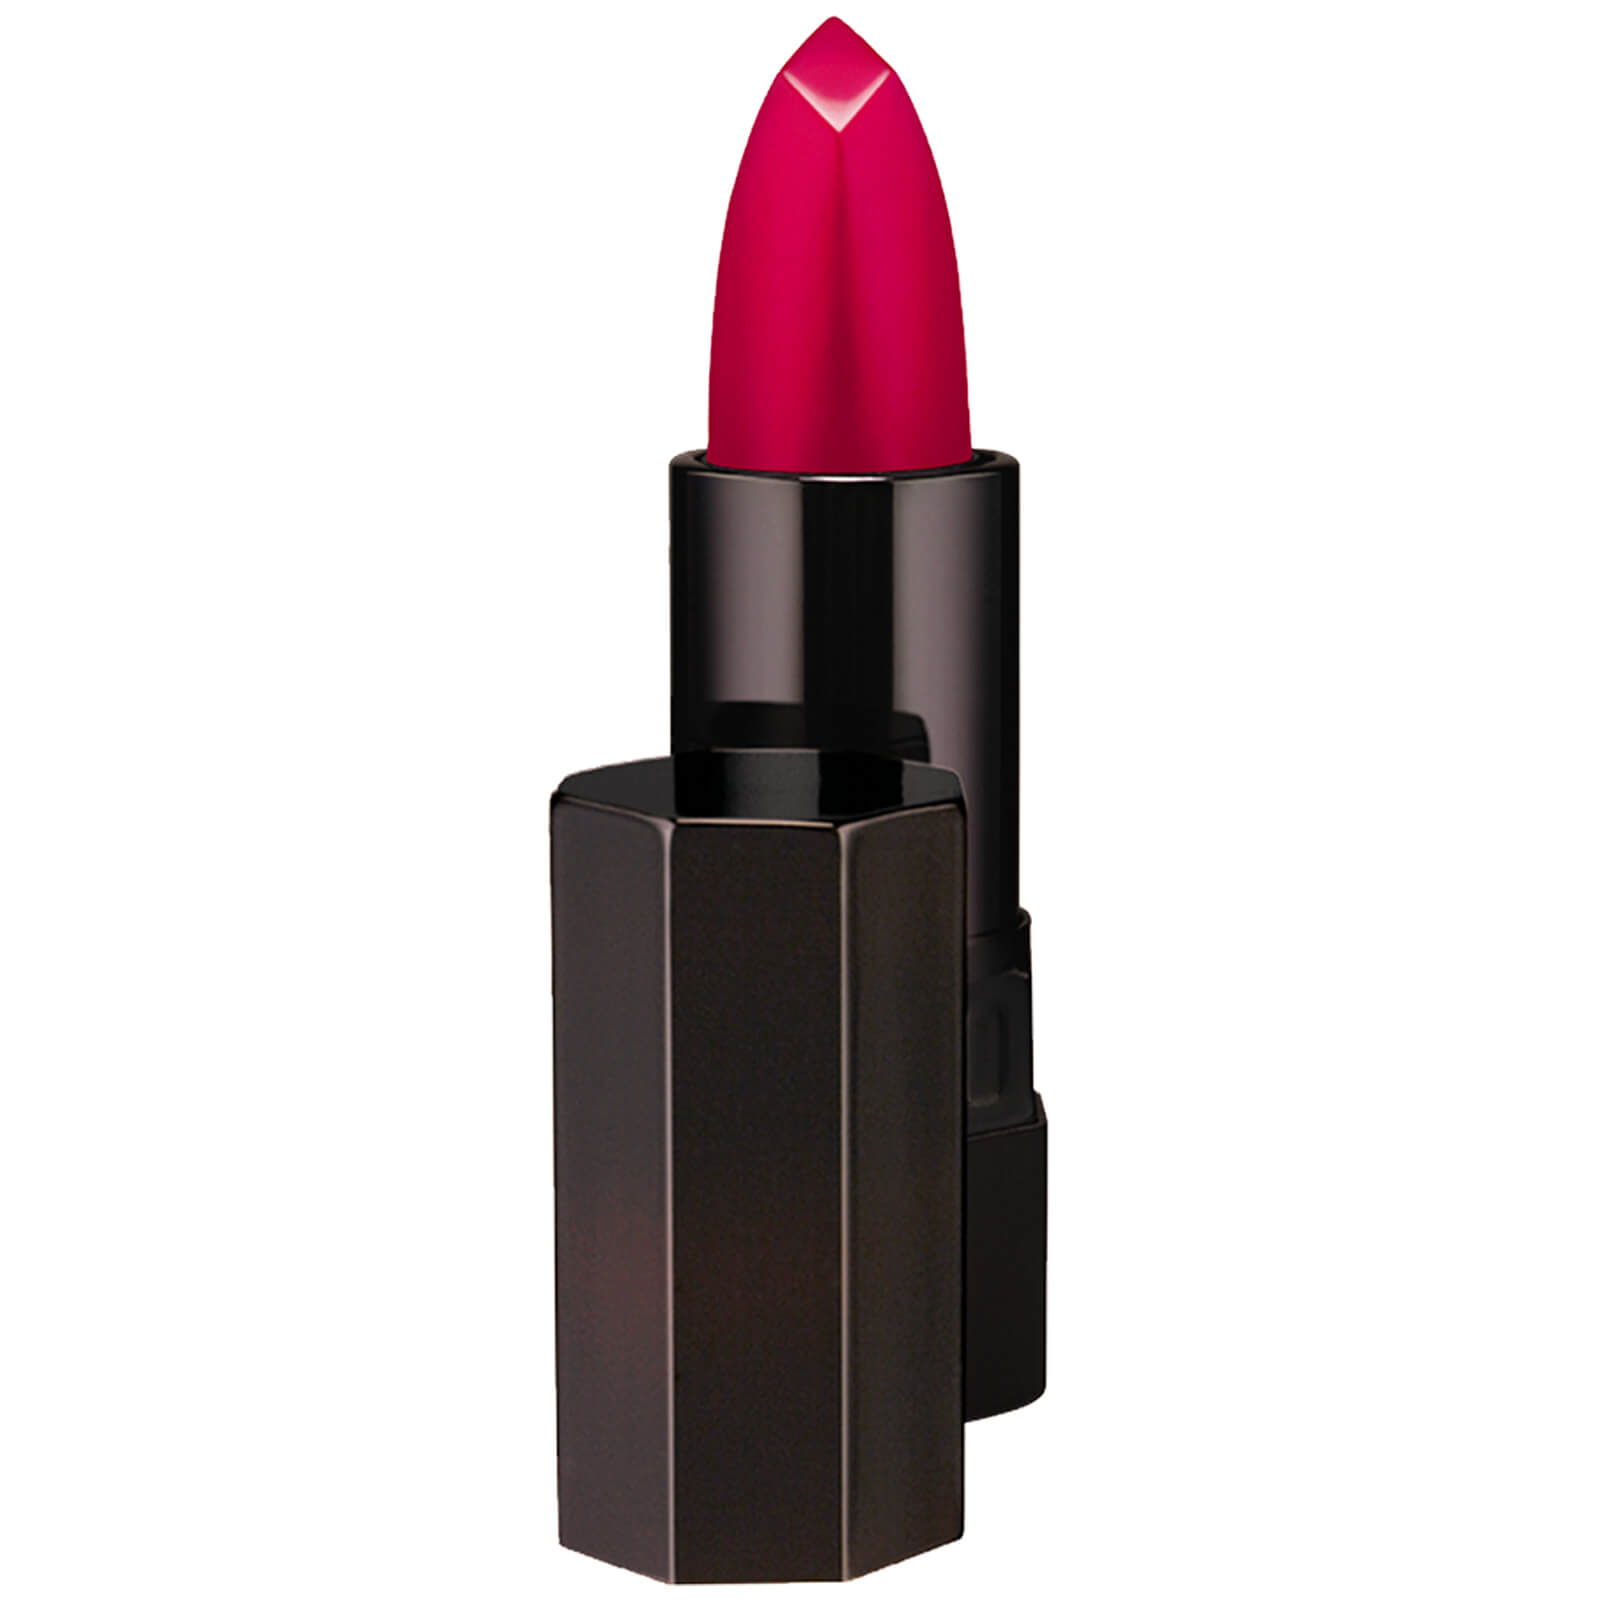 Serge Lutens Lipstick Fard a Levres Refill 2.3g (Various Shades) - Ndeg10 Garde Rose